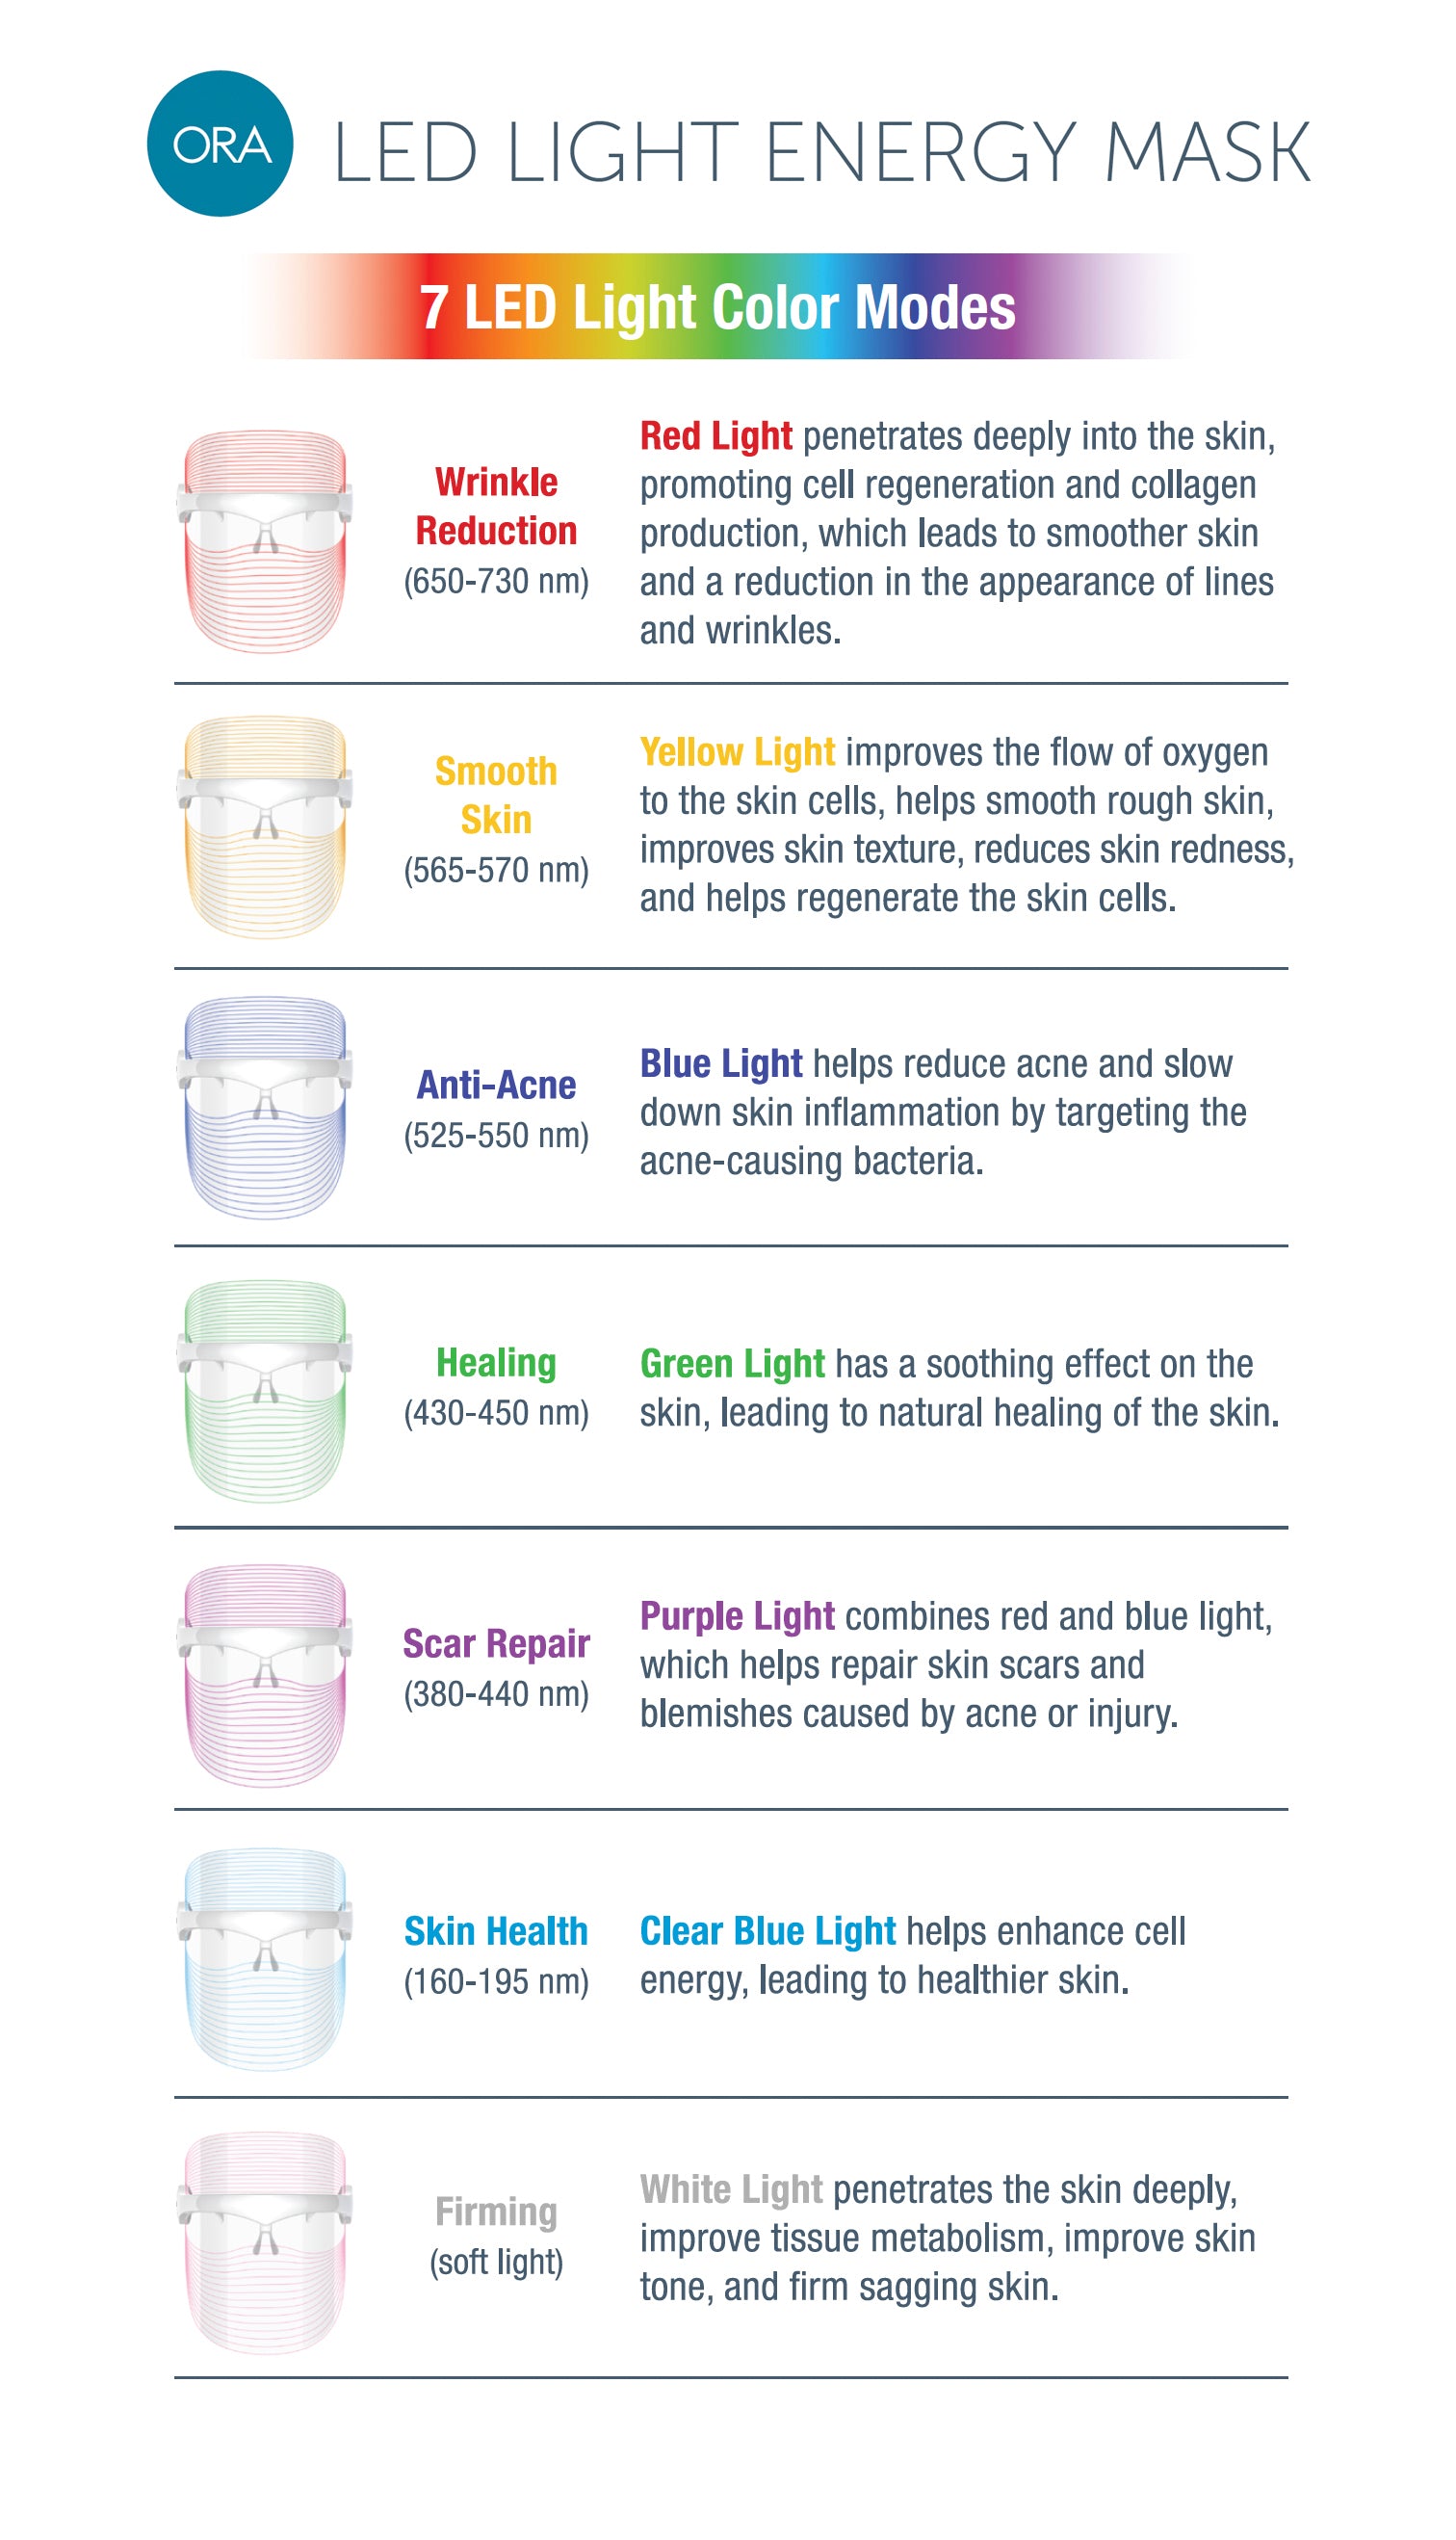 ORA LED Light Energy Mask (with 7 LED Light Color Modes)